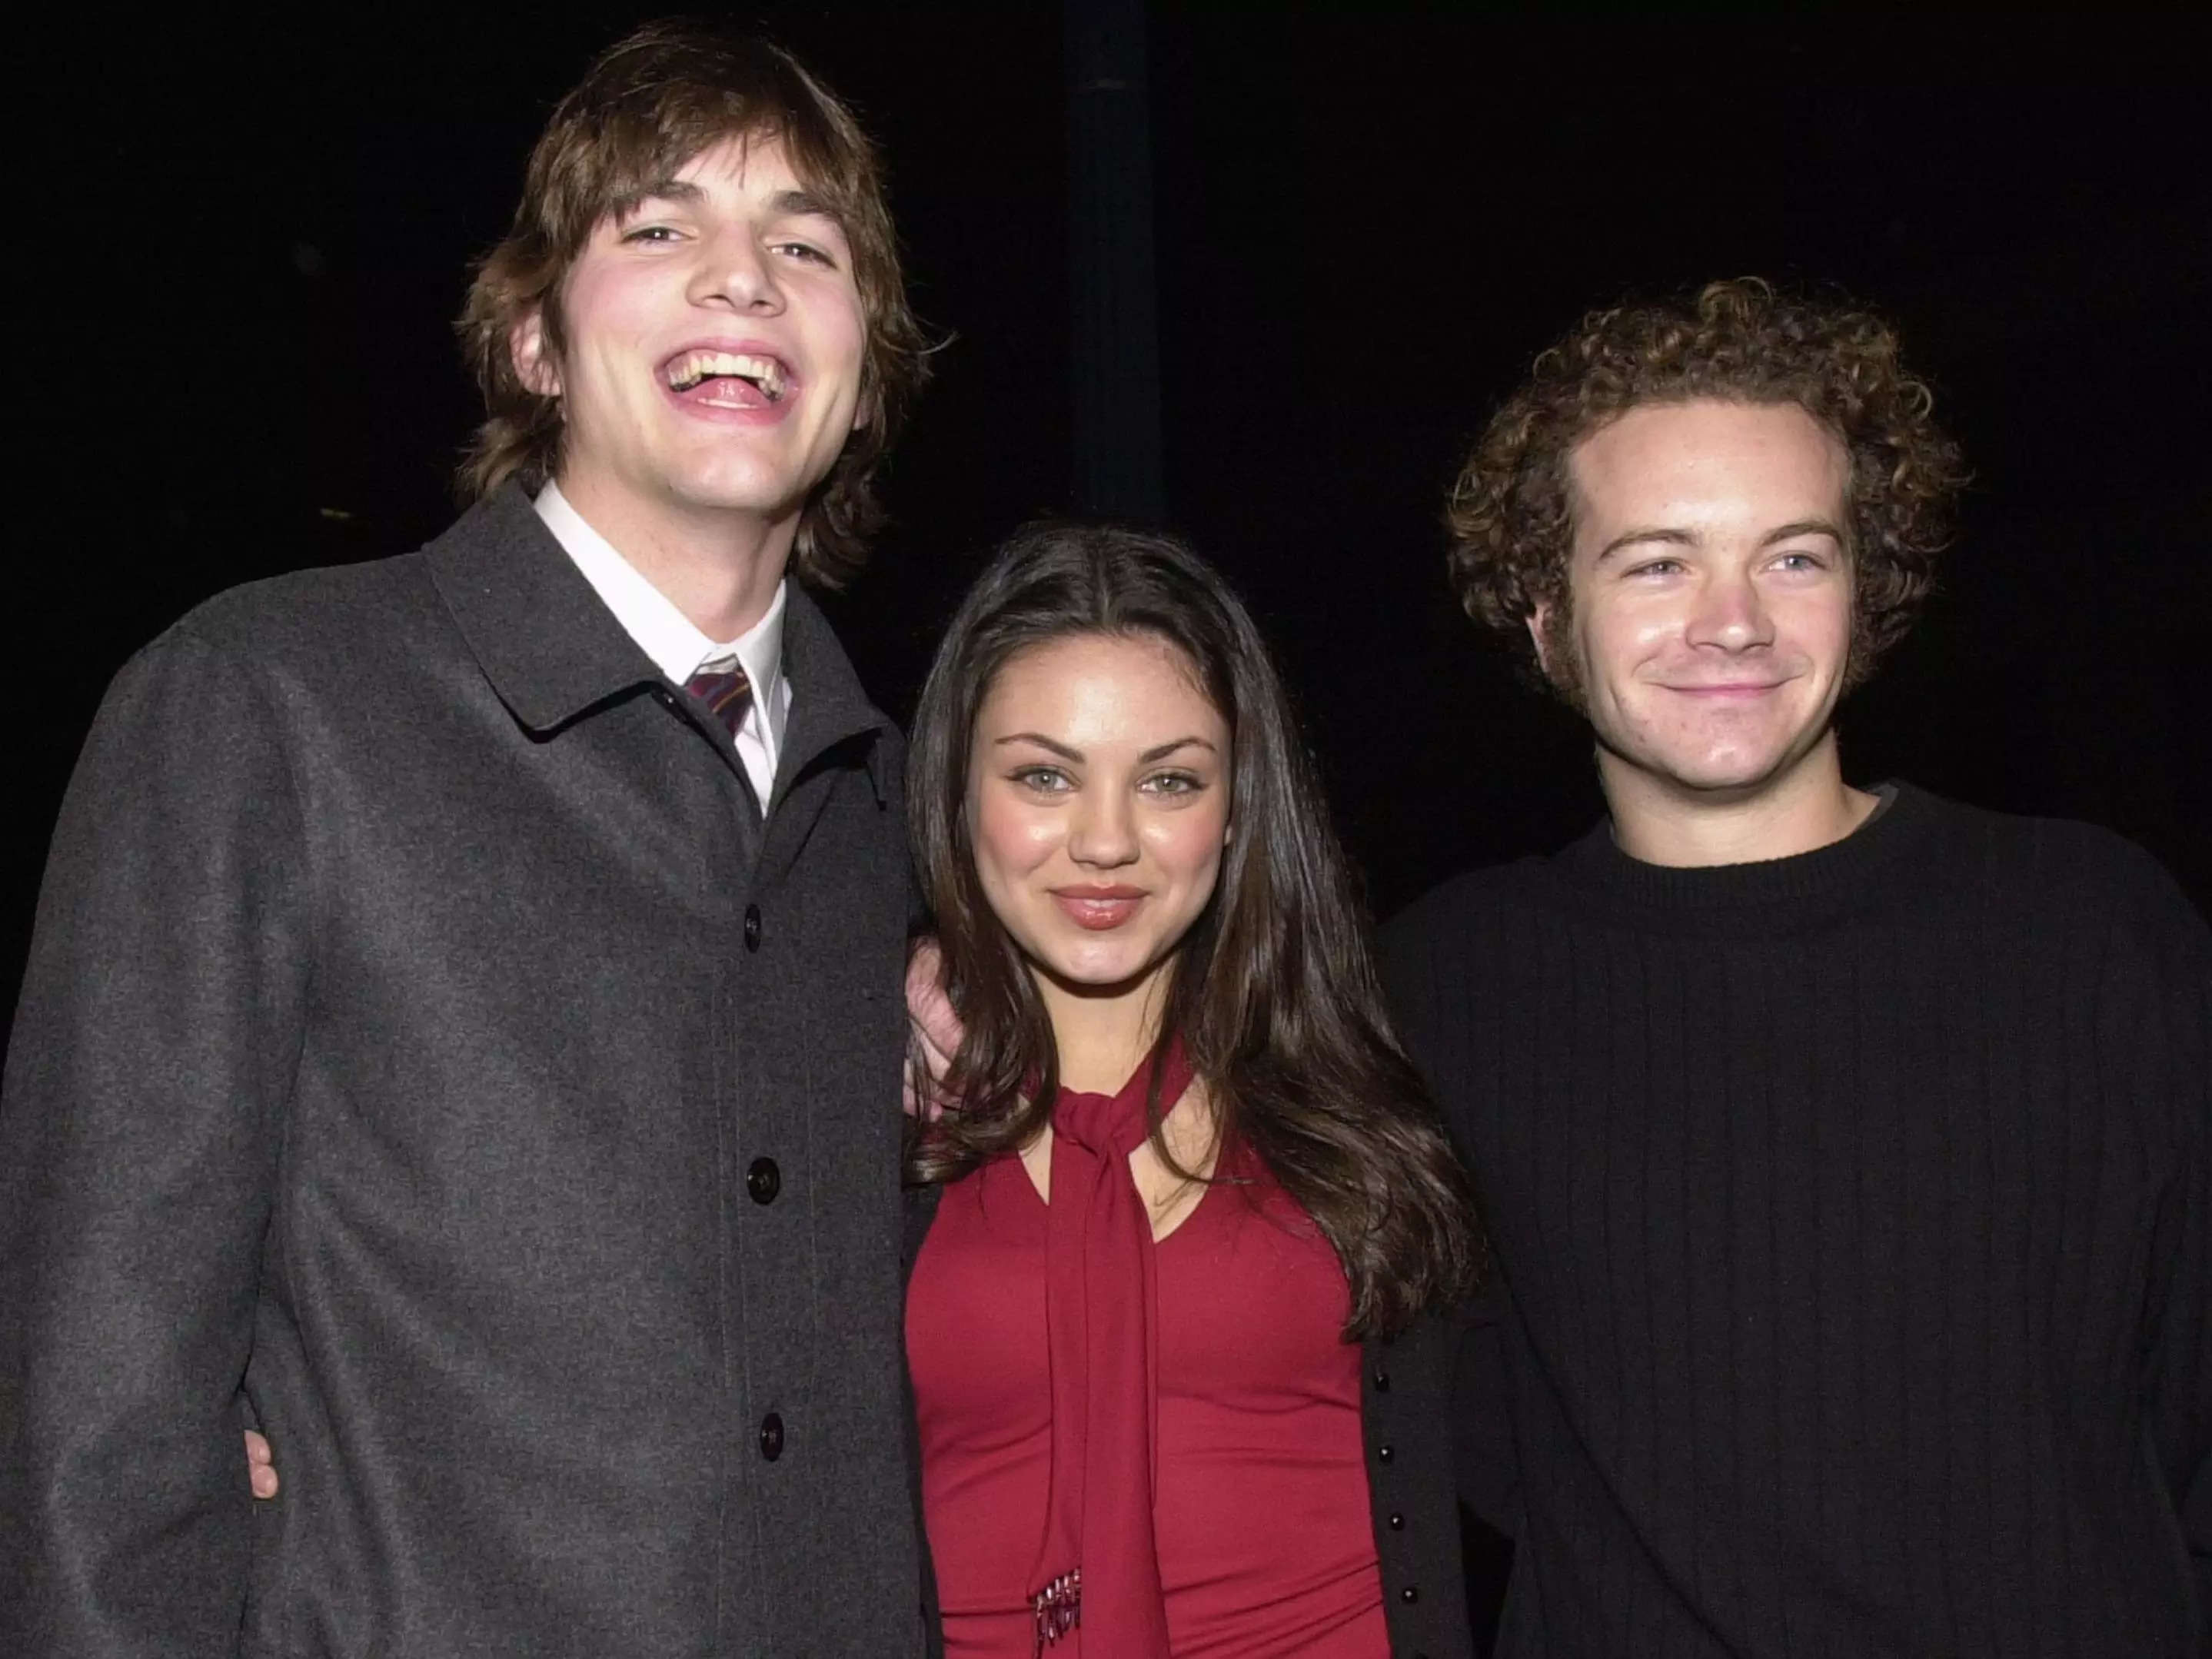 Ashton Kutcher, Mila Kunis, and Danny Masterson in 2000.